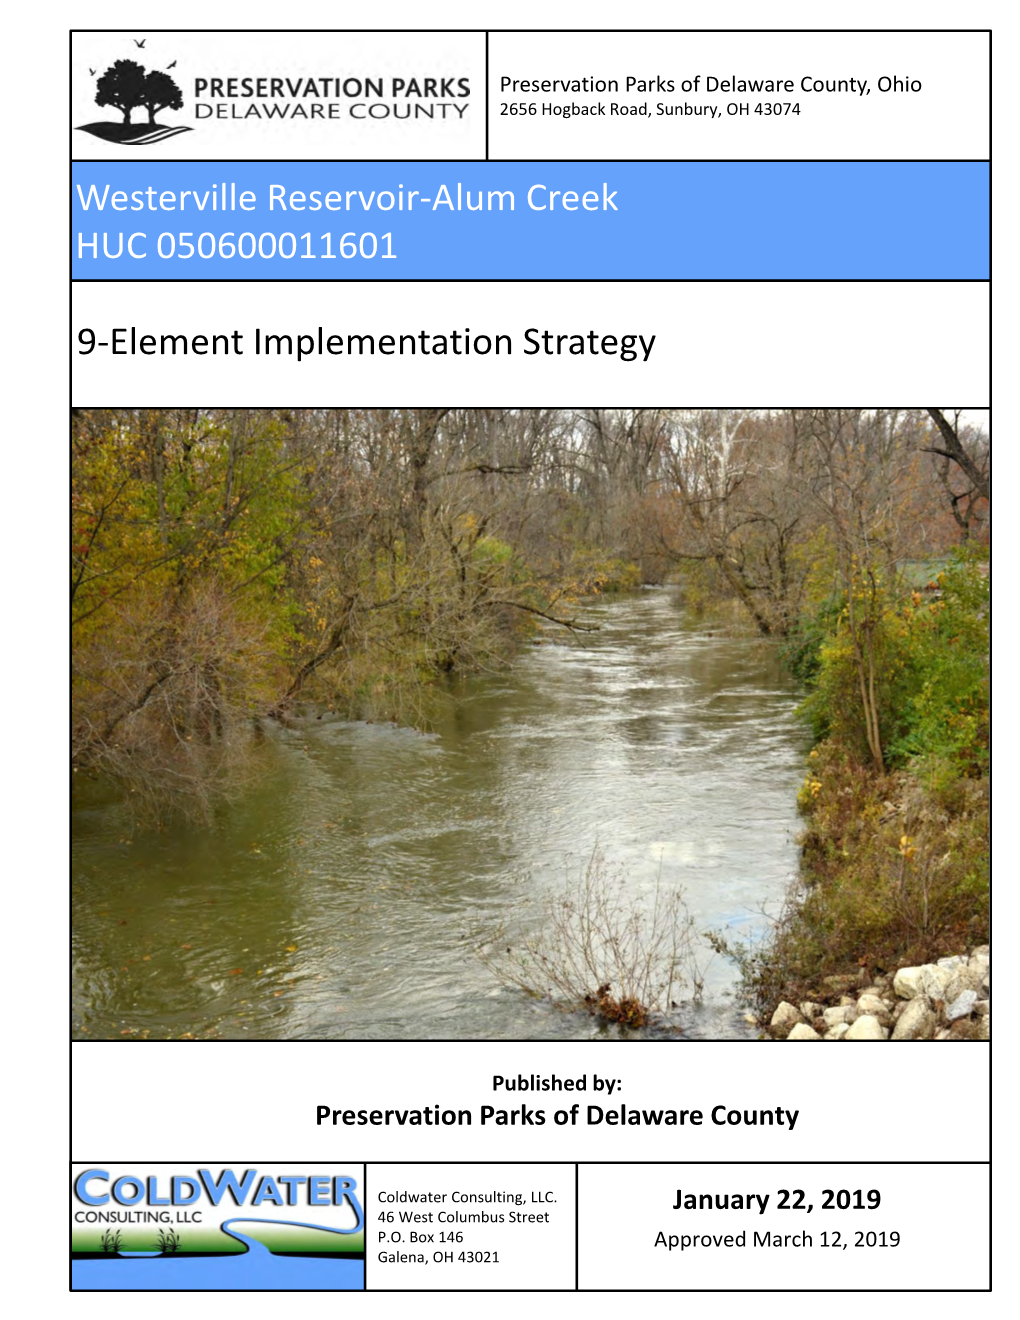 Westerville Reservoir-Alum Creek HUC 050600011601